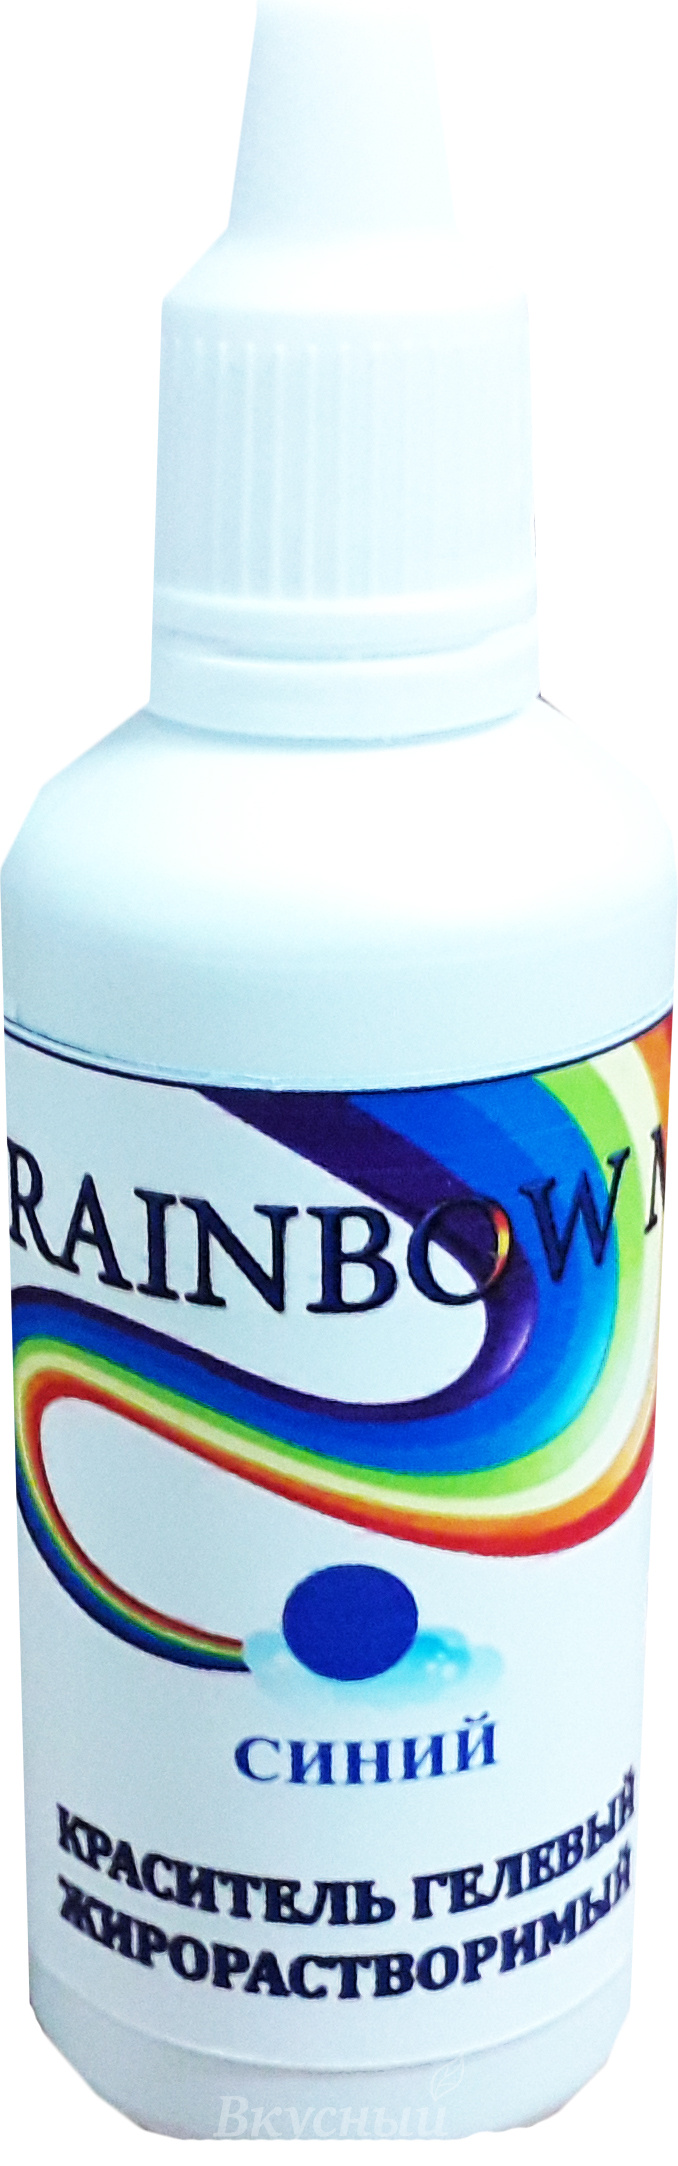 Краска Rainbow Man Синяя 40 гр